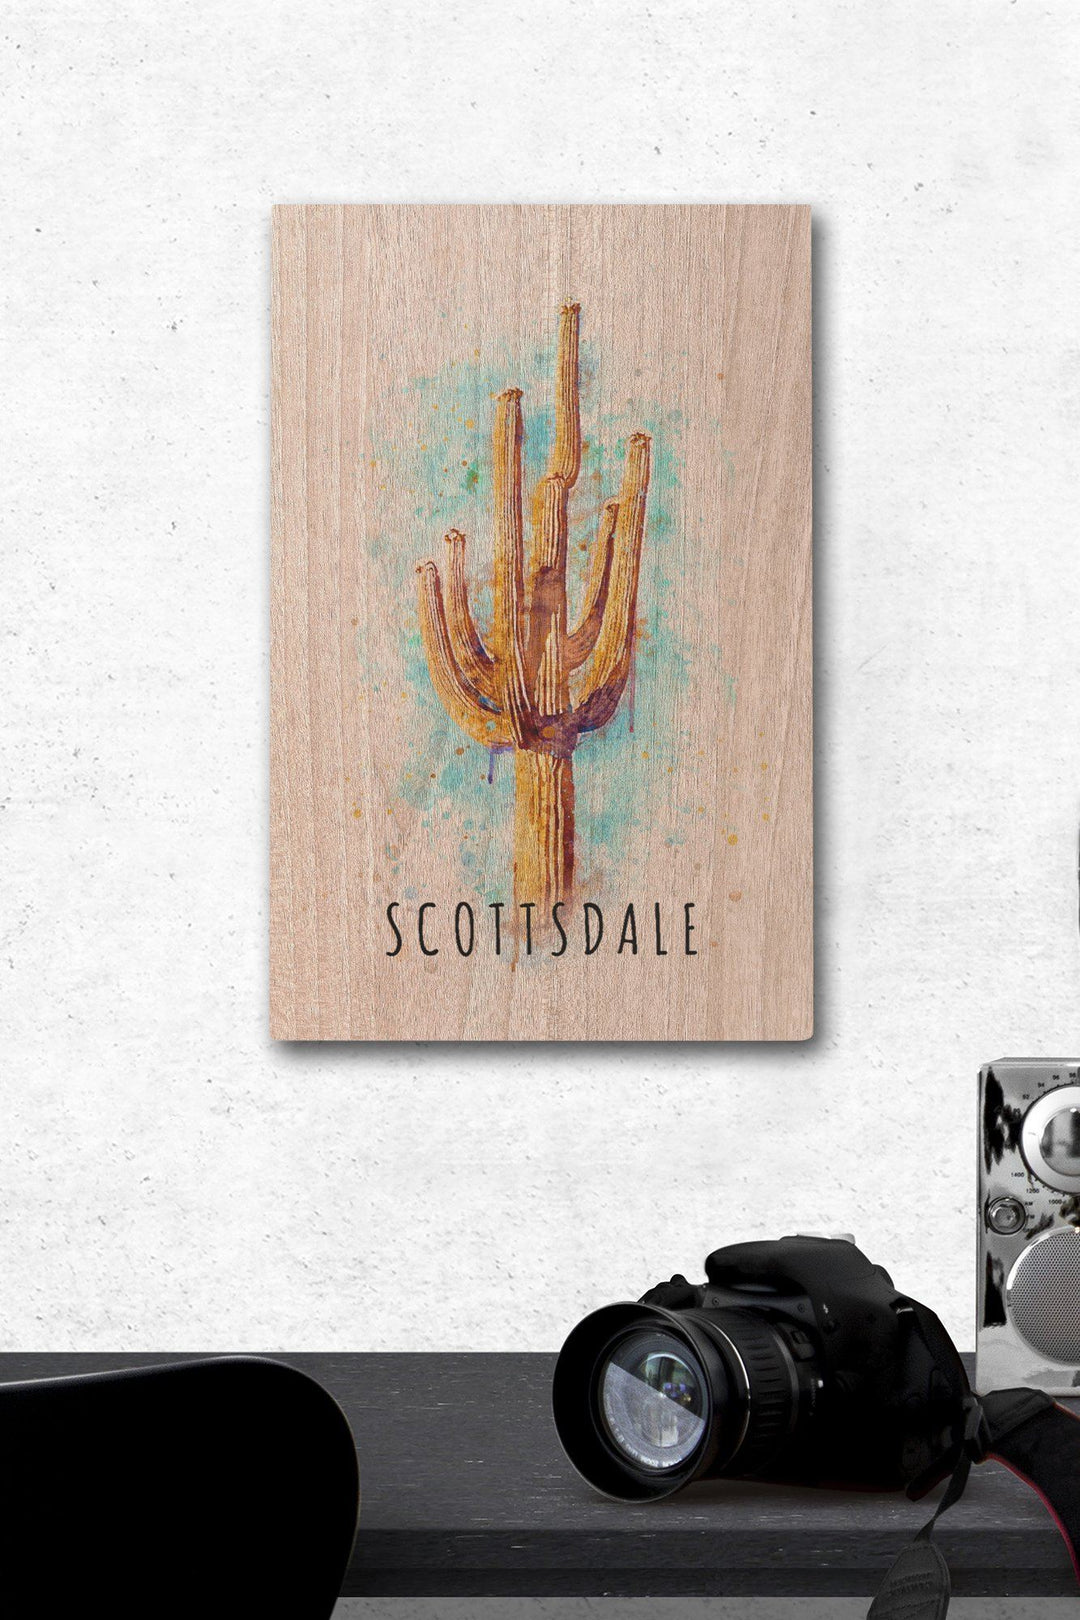 Scottsdale, Arizona, Saguaro Cactus, Watercolor, Contour, Lantern Press Artwork, Wood Signs and Postcards Wood Lantern Press 